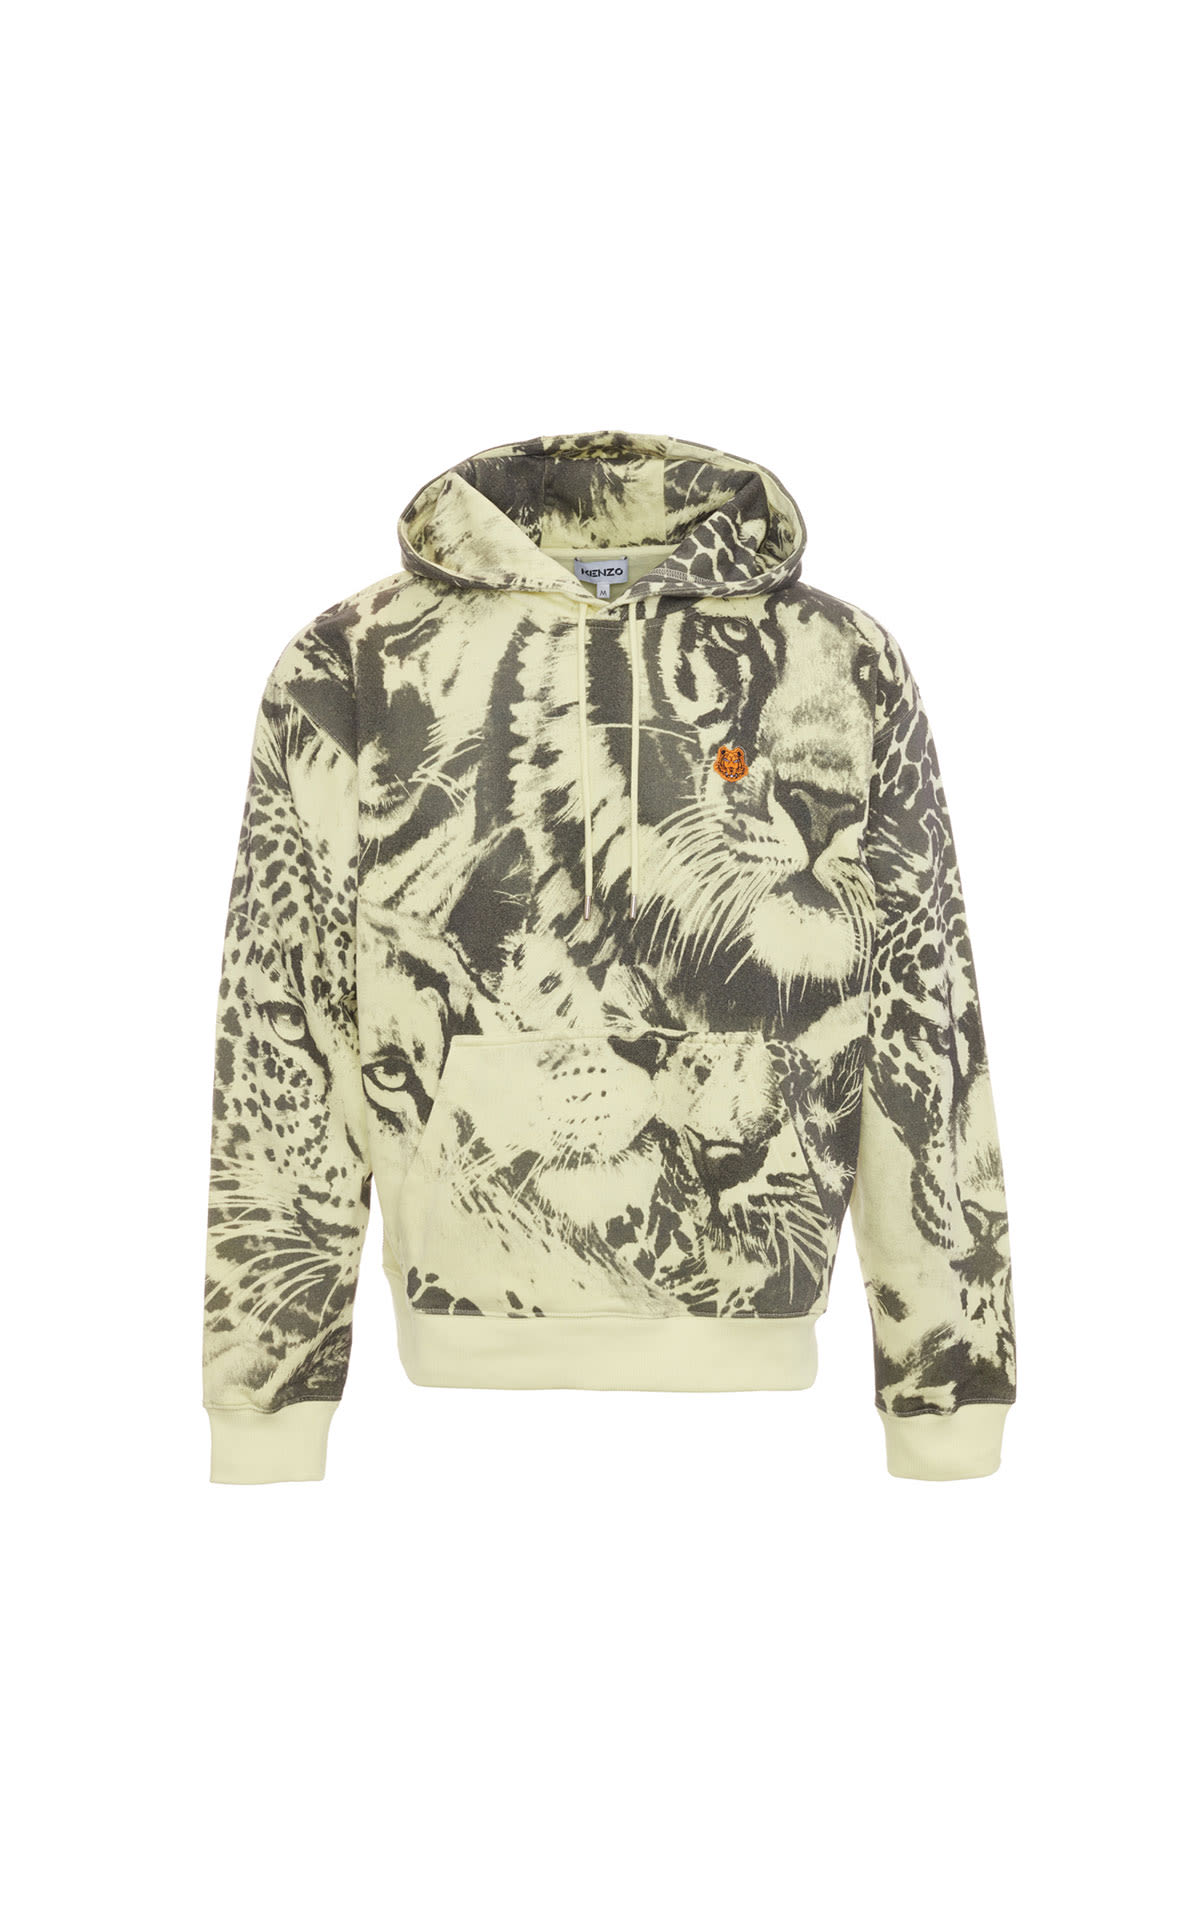 Kenzo Tiger print hoodie from Bicester Village